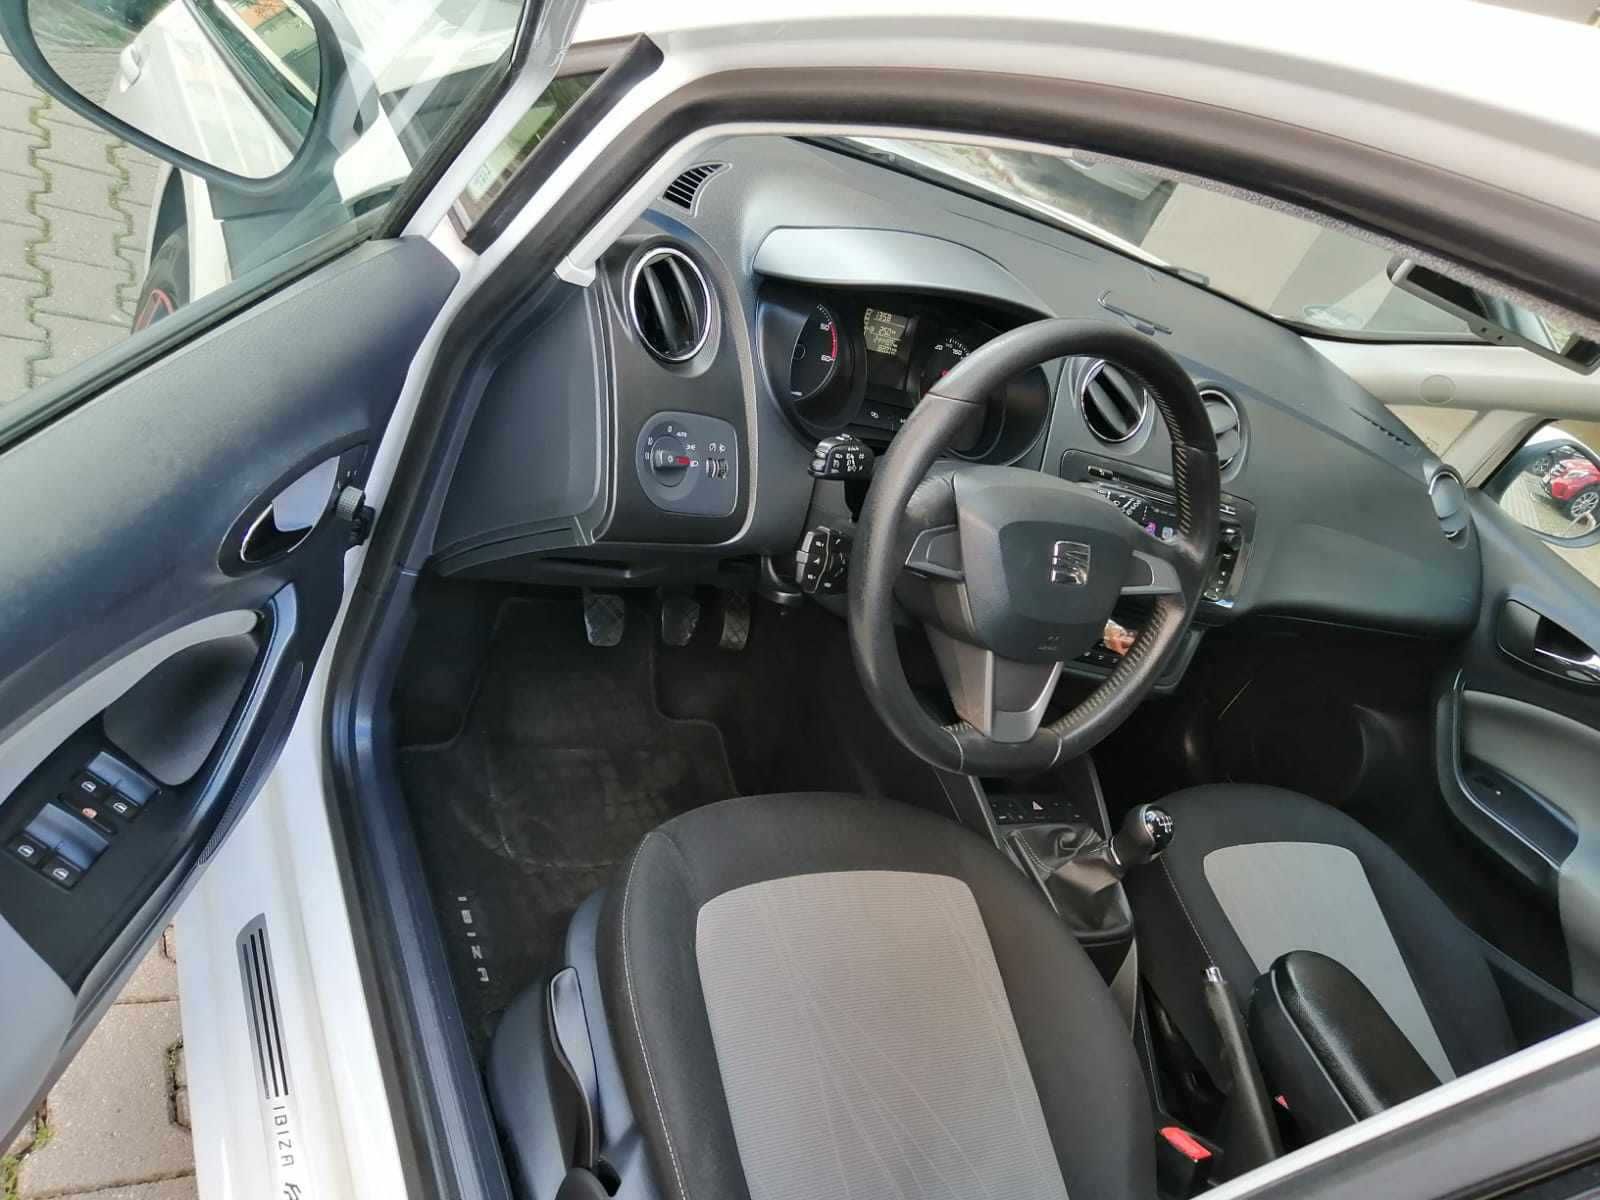 Seat Ibiza 1.2 Diesel 75 Cp 2015 Euro 5